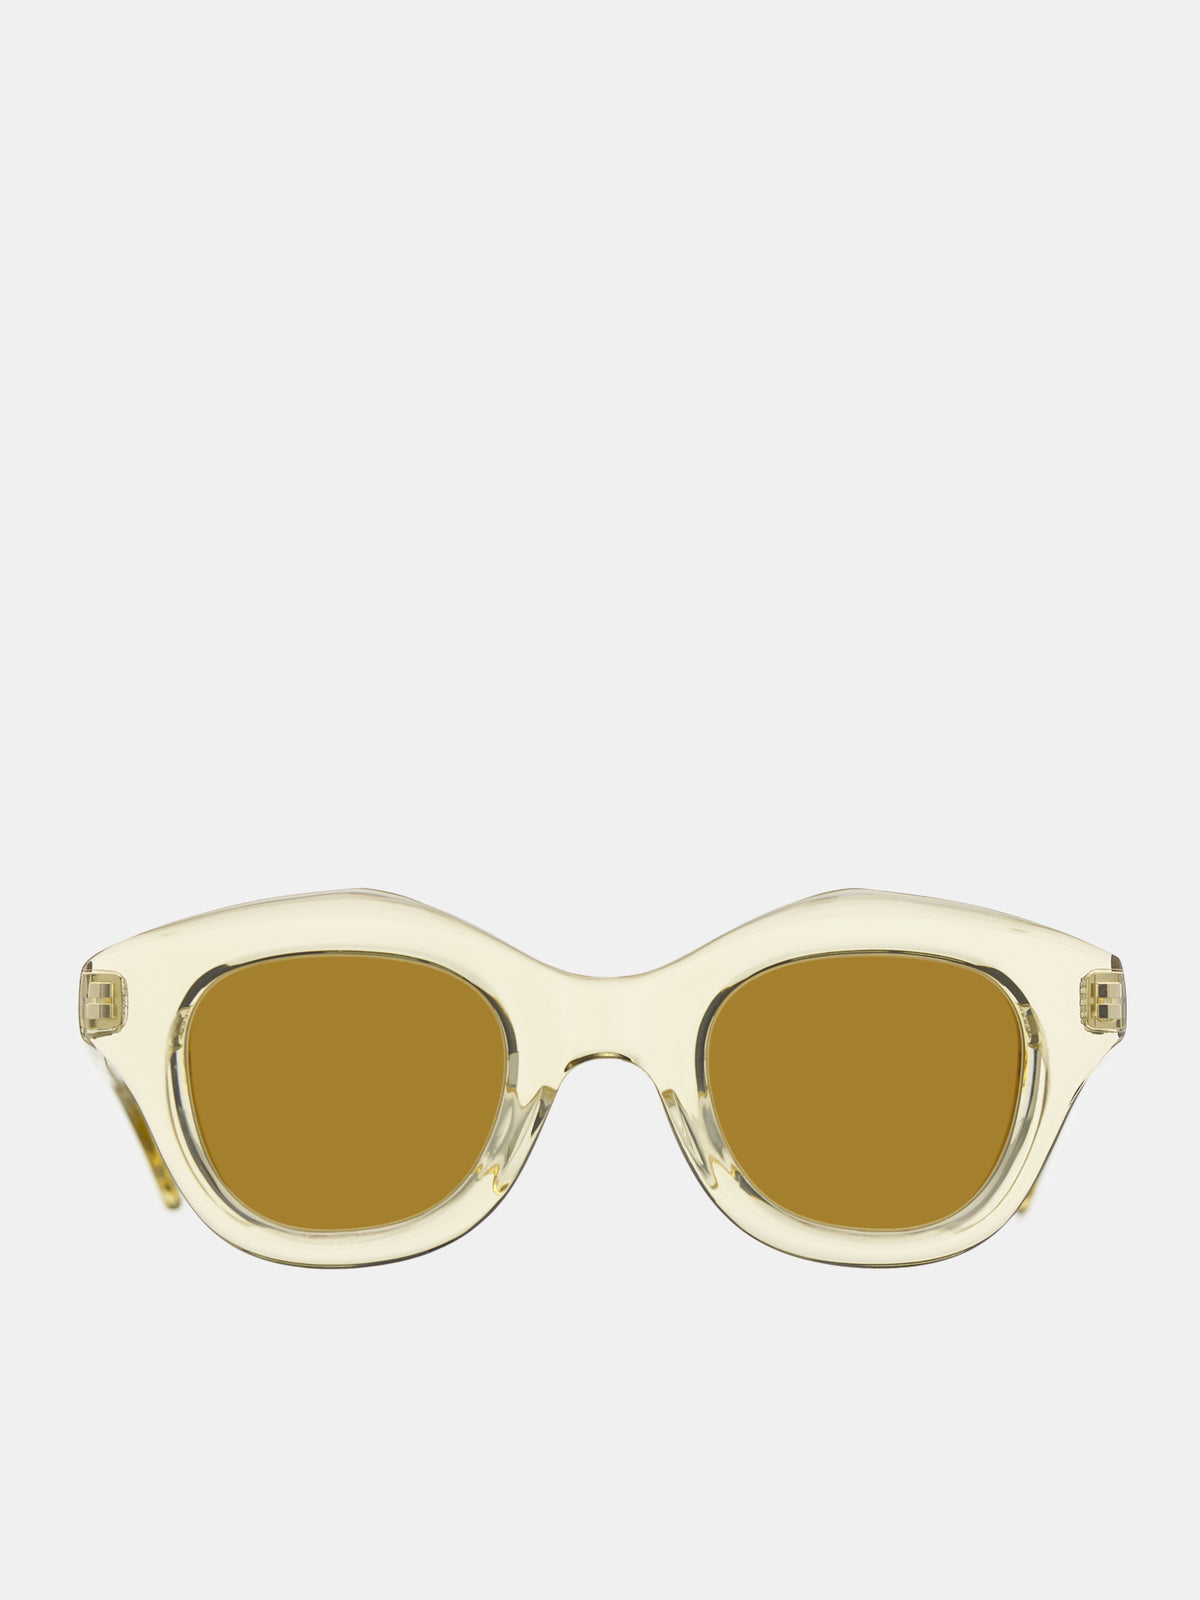 Hook Sunglasses (HOOK-CLEAR-AMBER4)